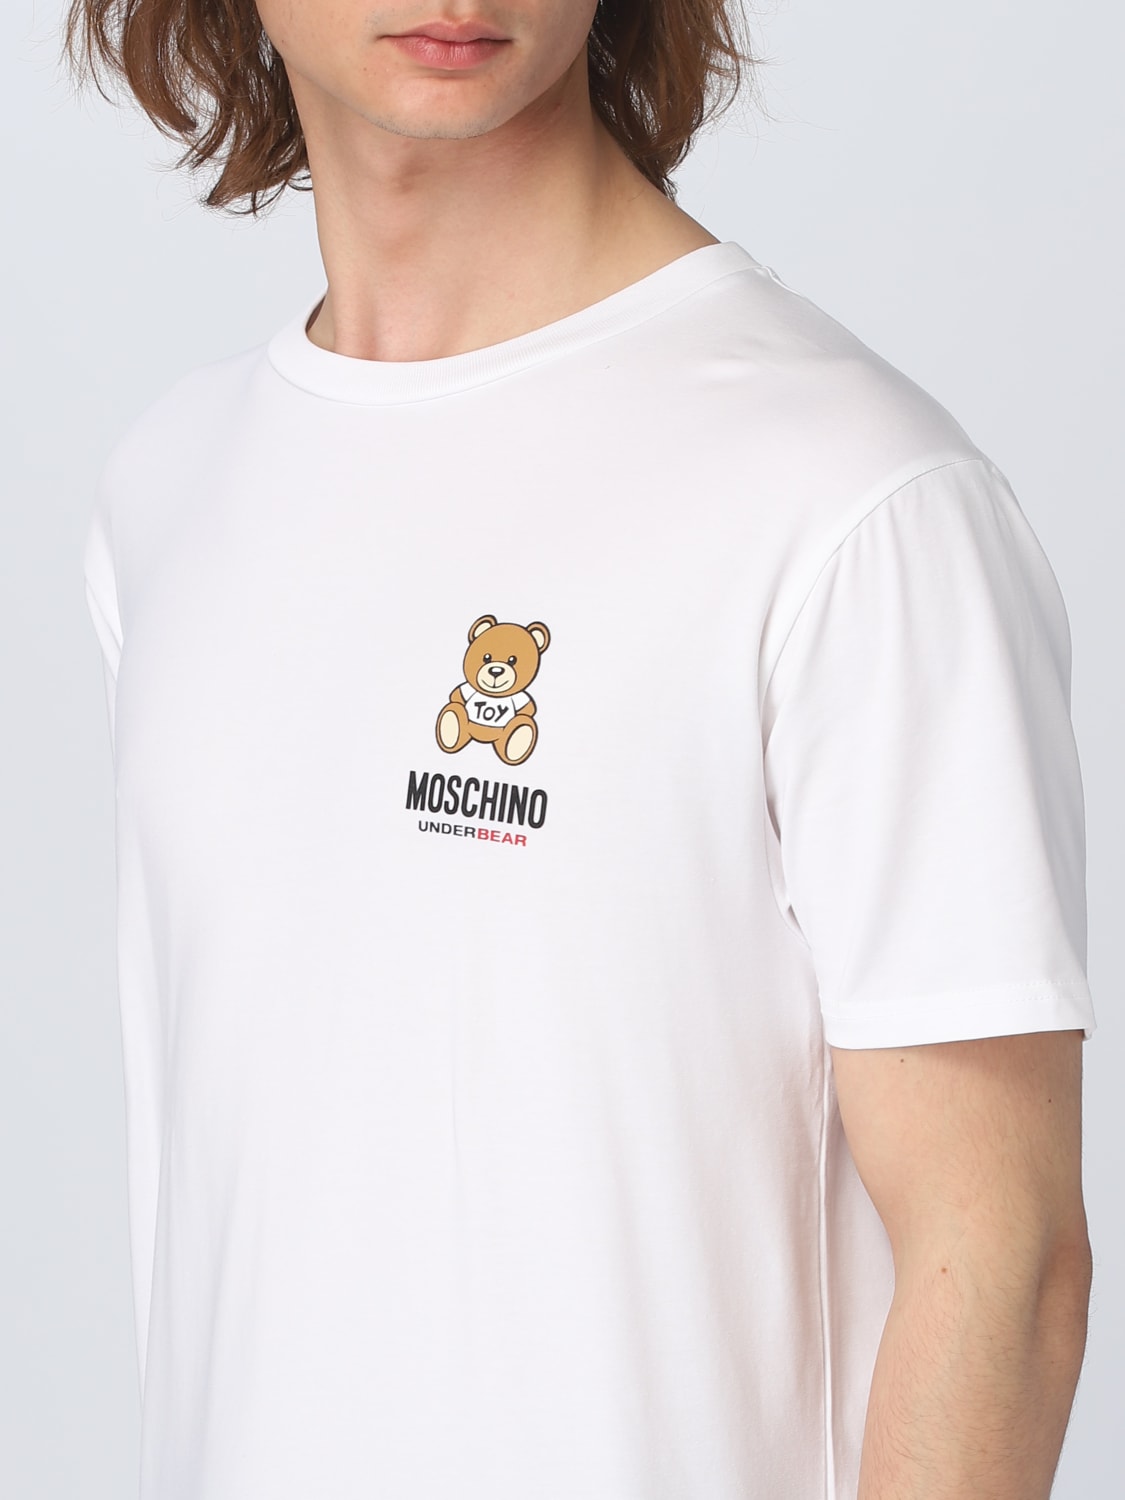 Moschino Camisetas for Hombre - Official Store